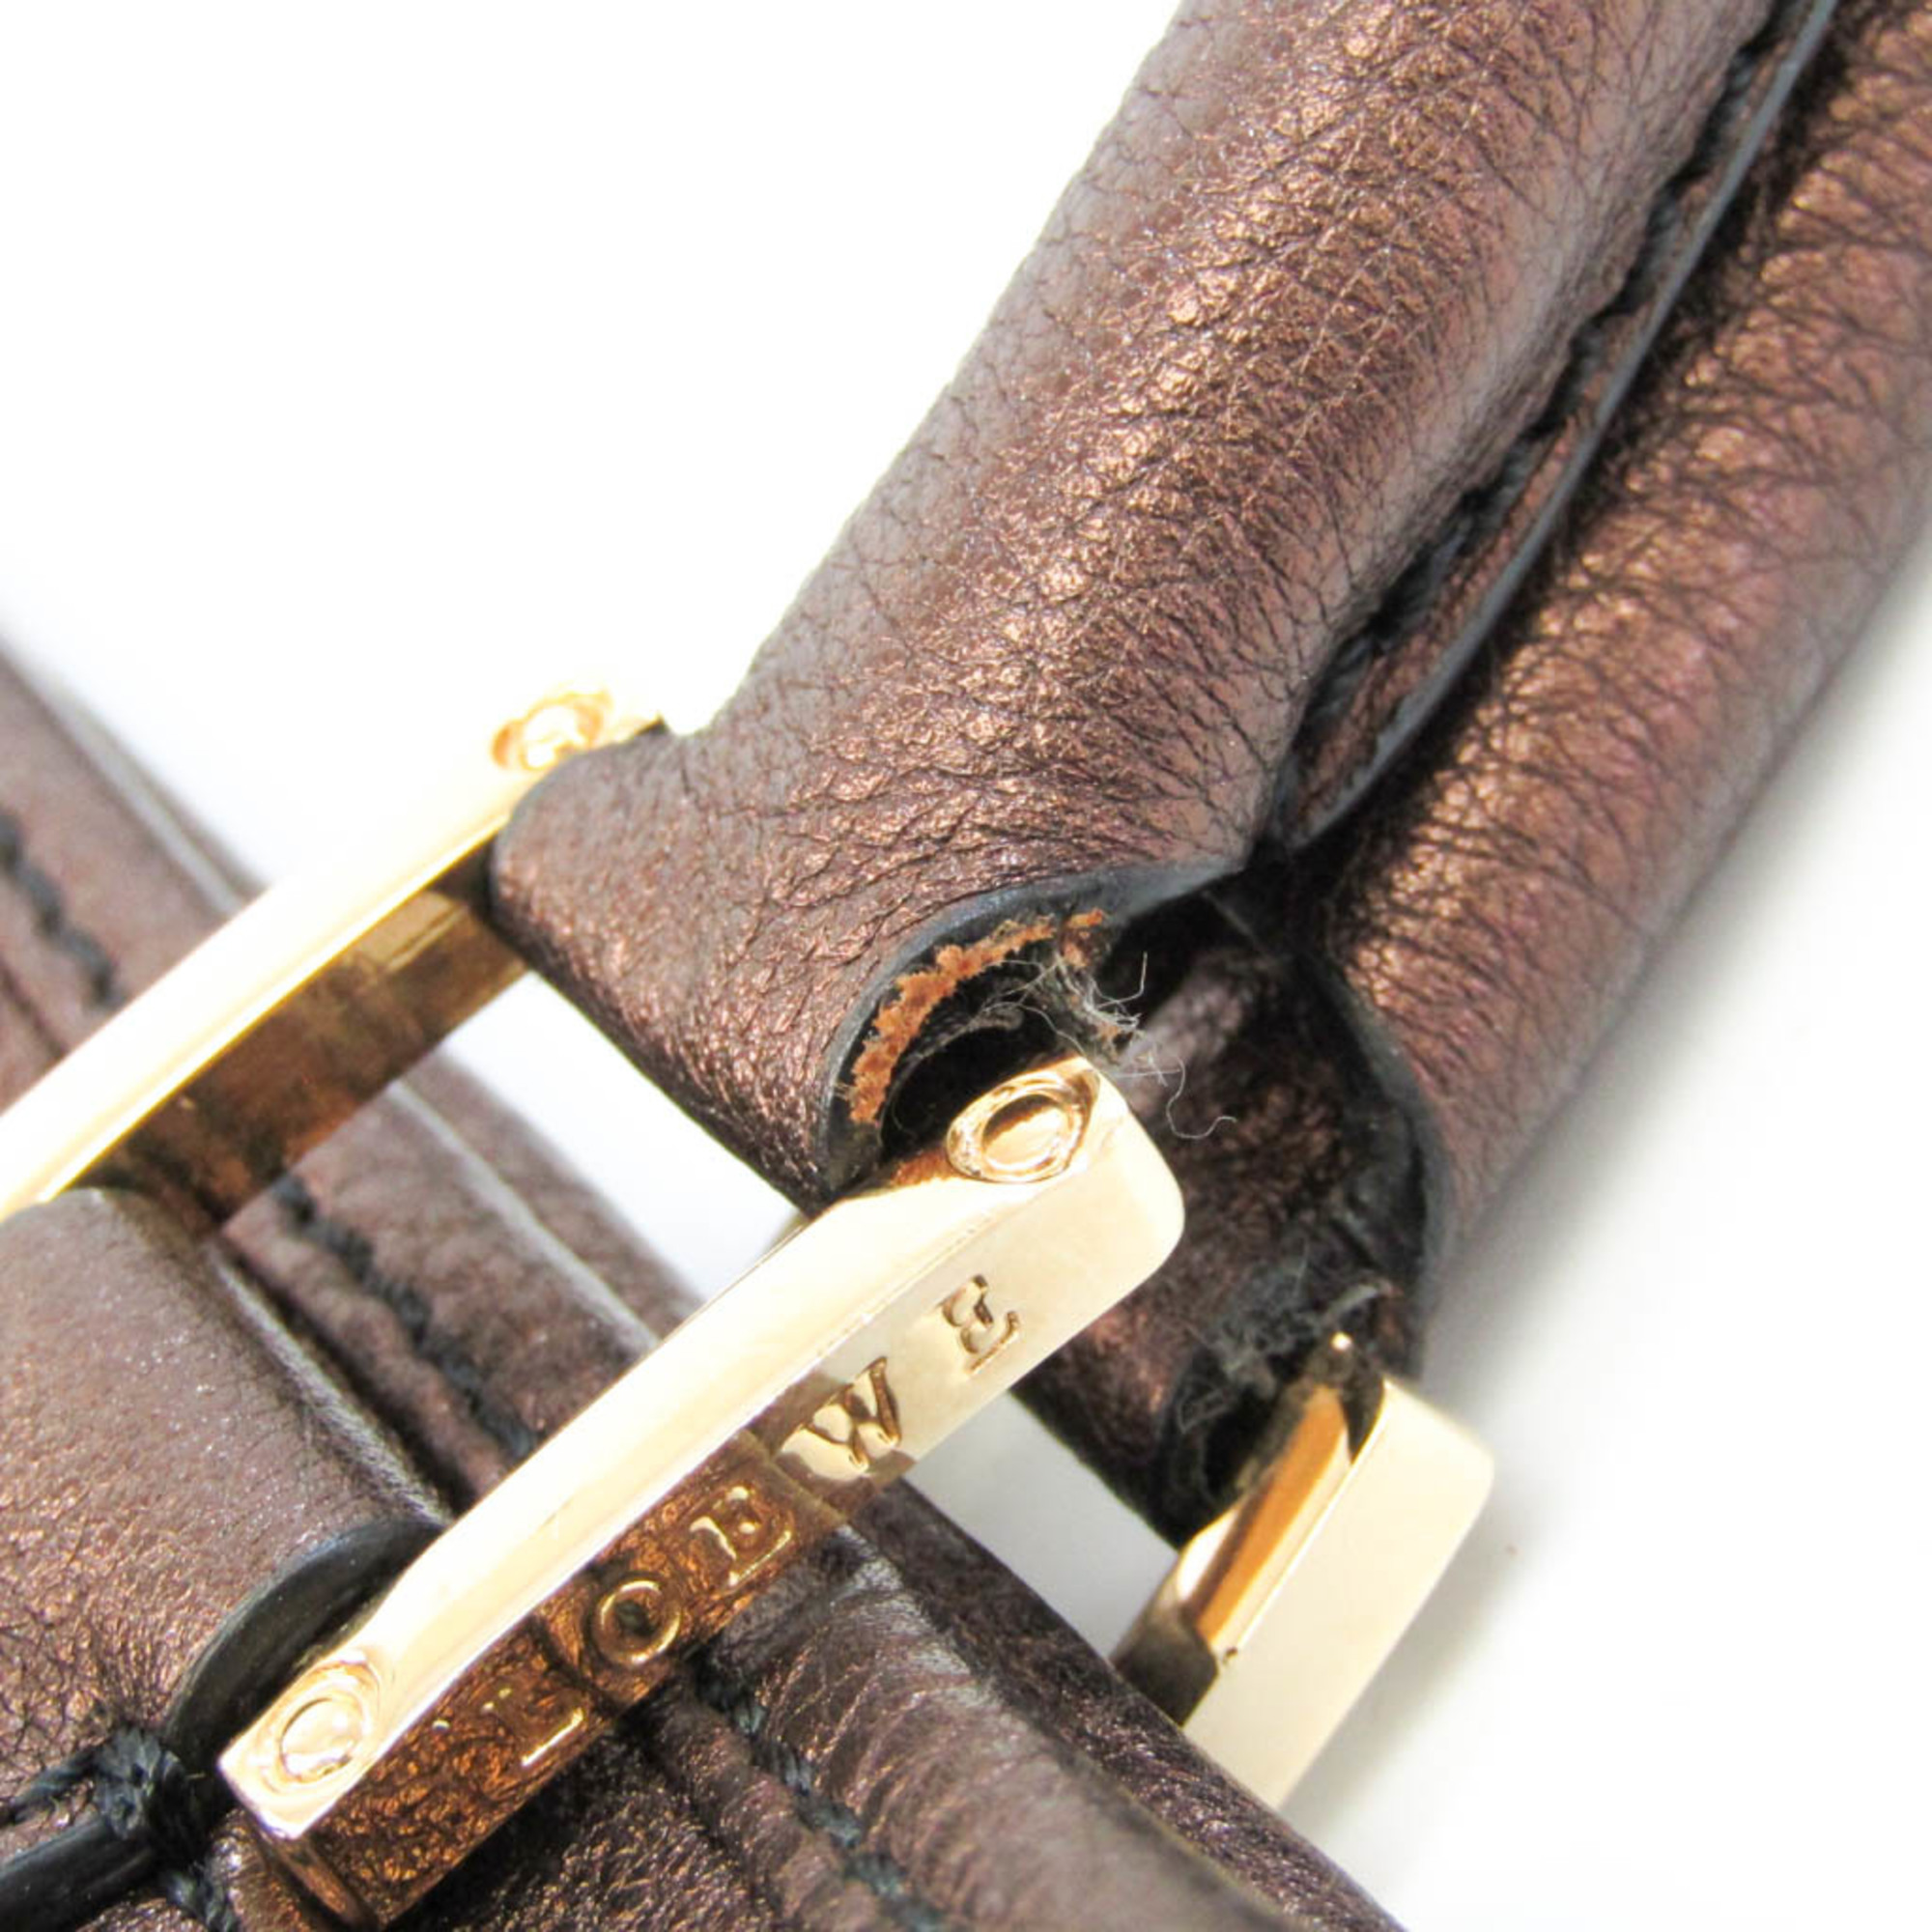 Loewe Women's Leather Handbag Metallic Brown